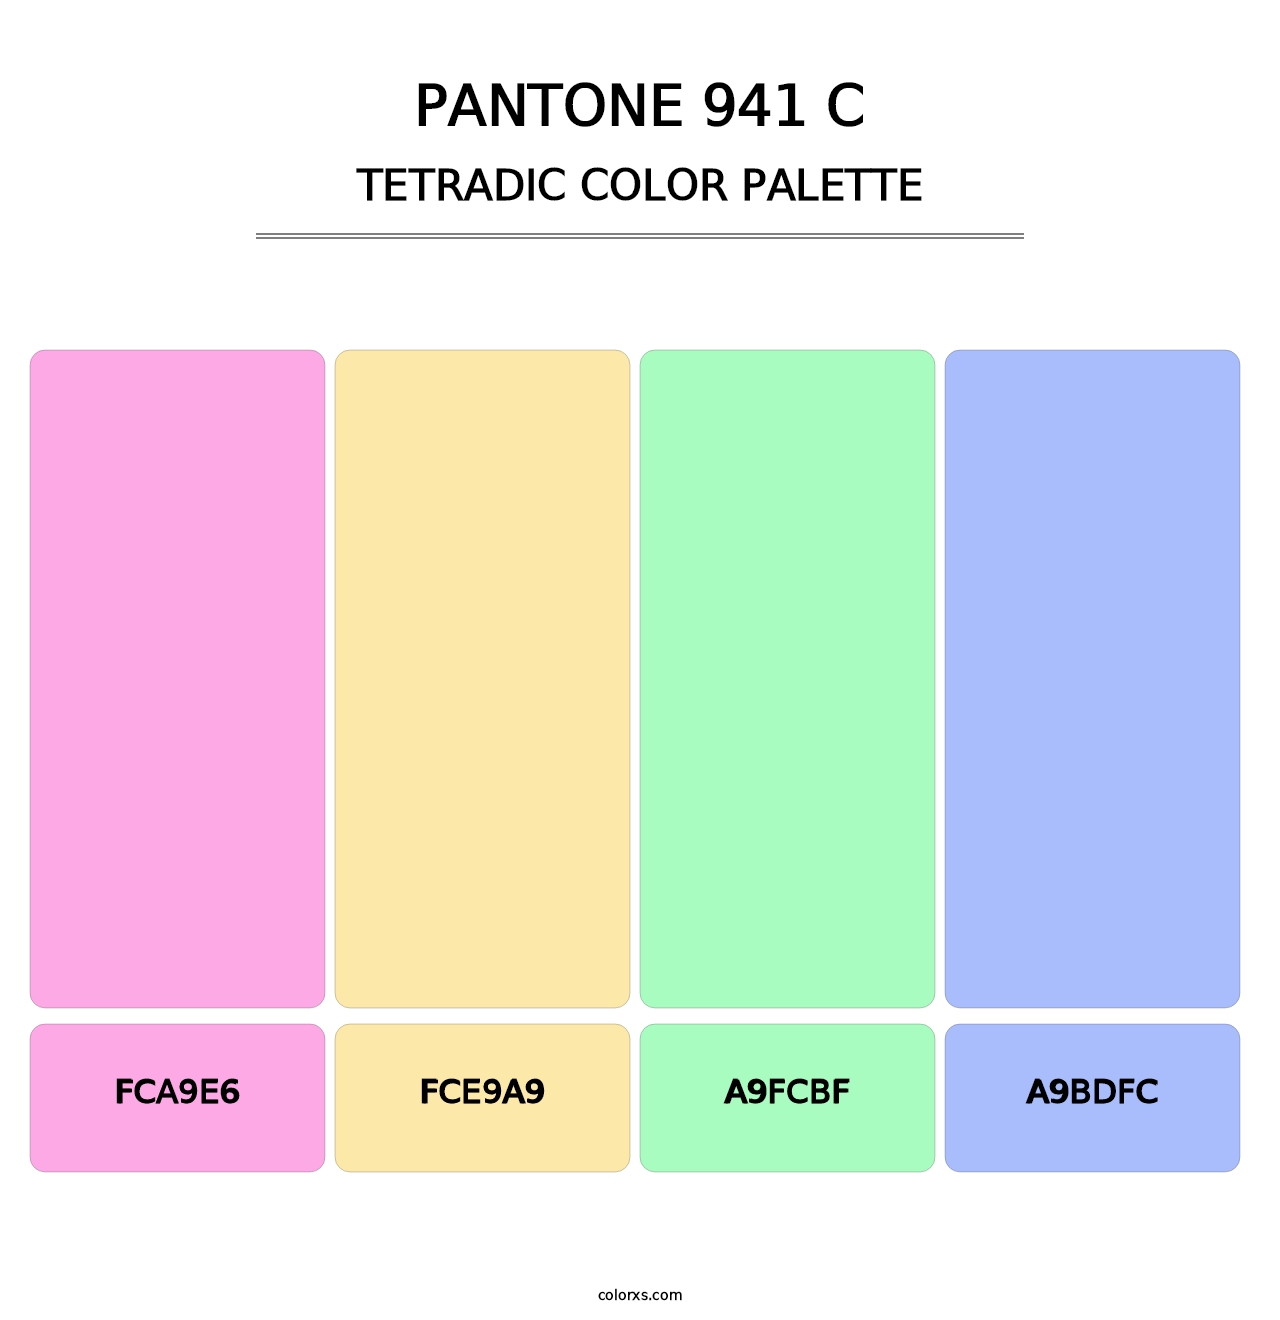 PANTONE 941 C - Tetradic Color Palette